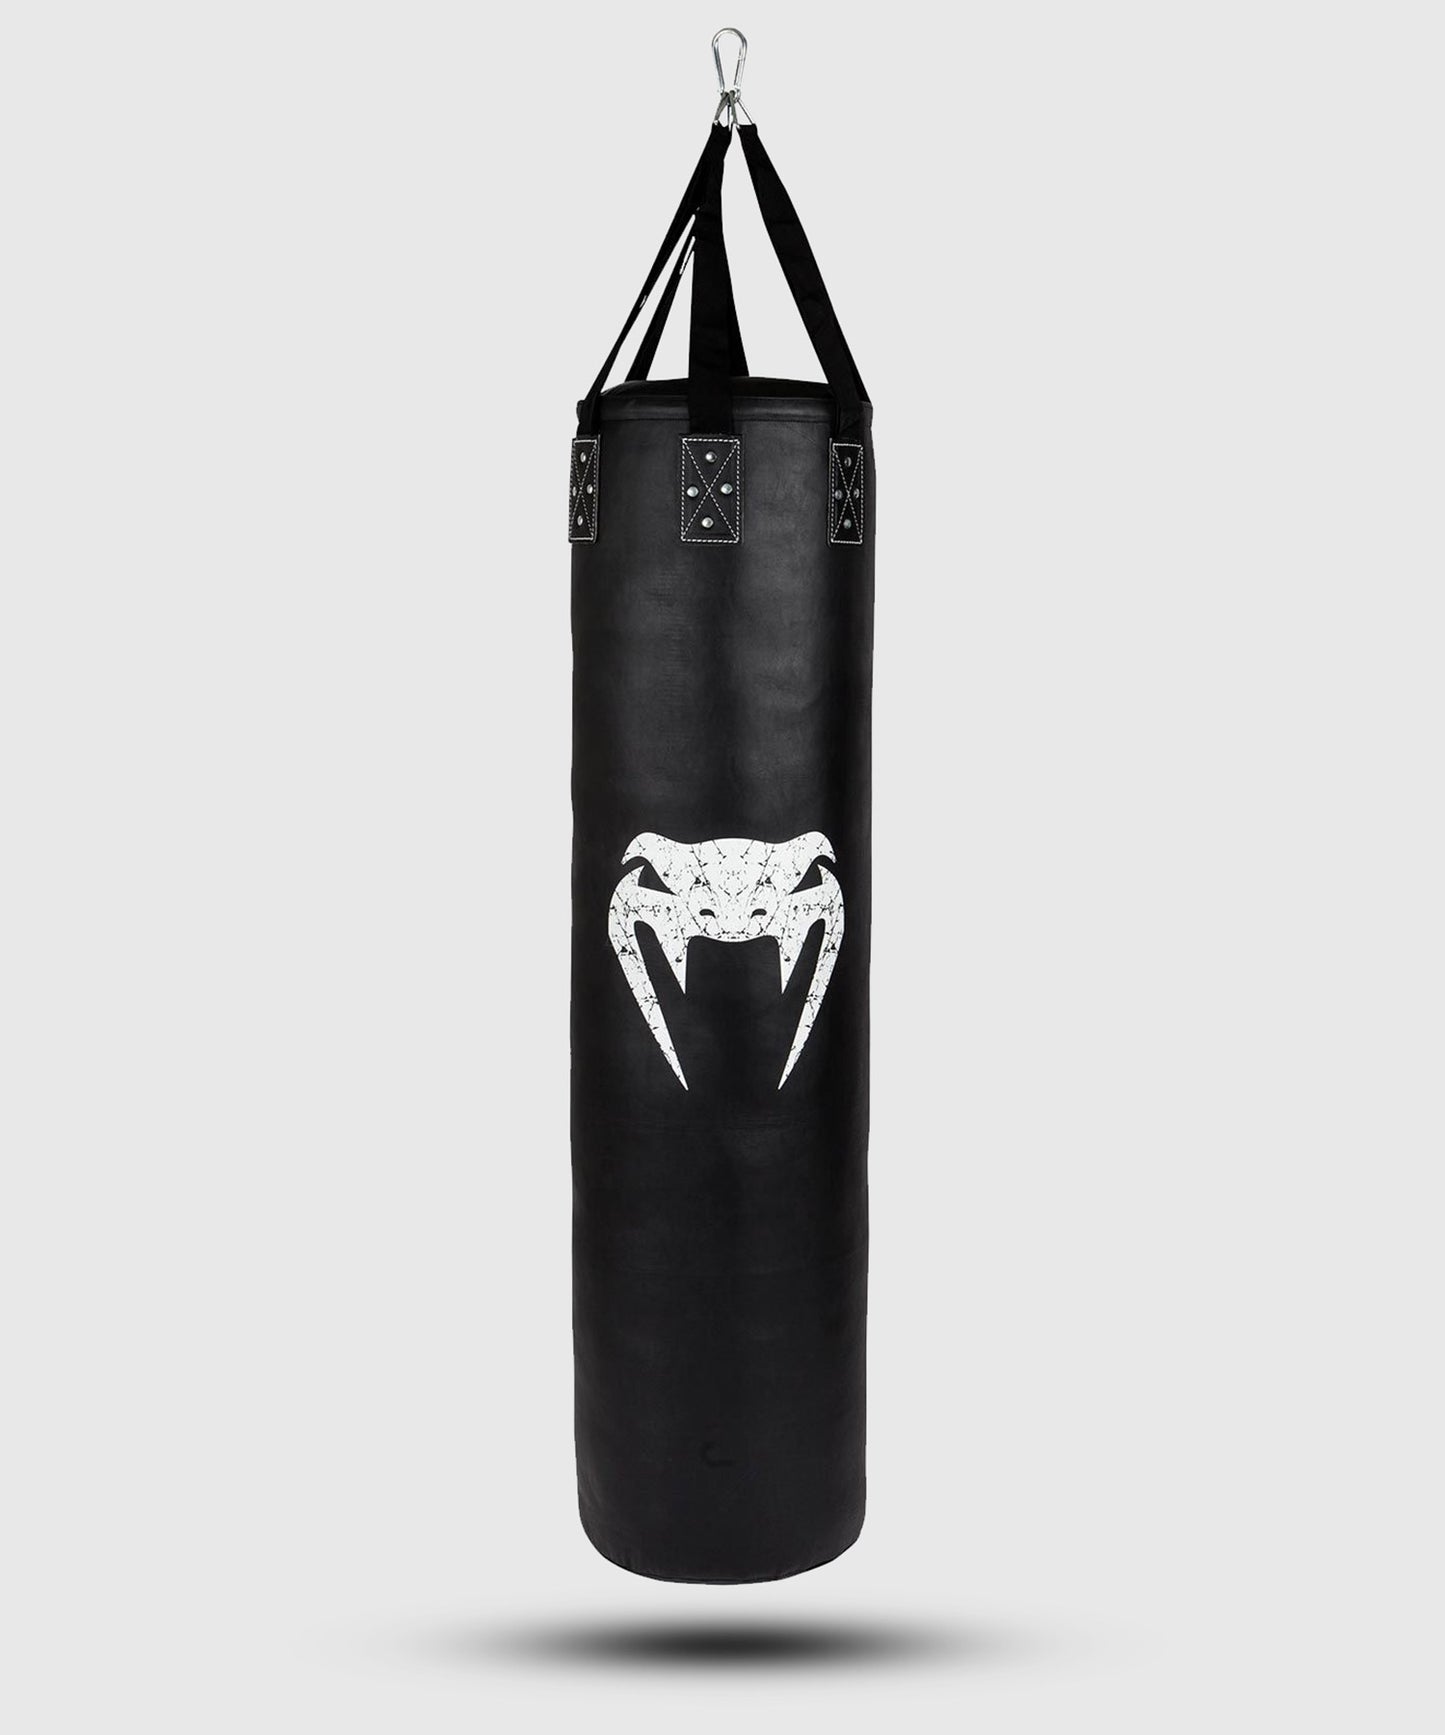 Venum Challenger Heavy bag + Ceiling Hook - Black/White - Filled - 170cm